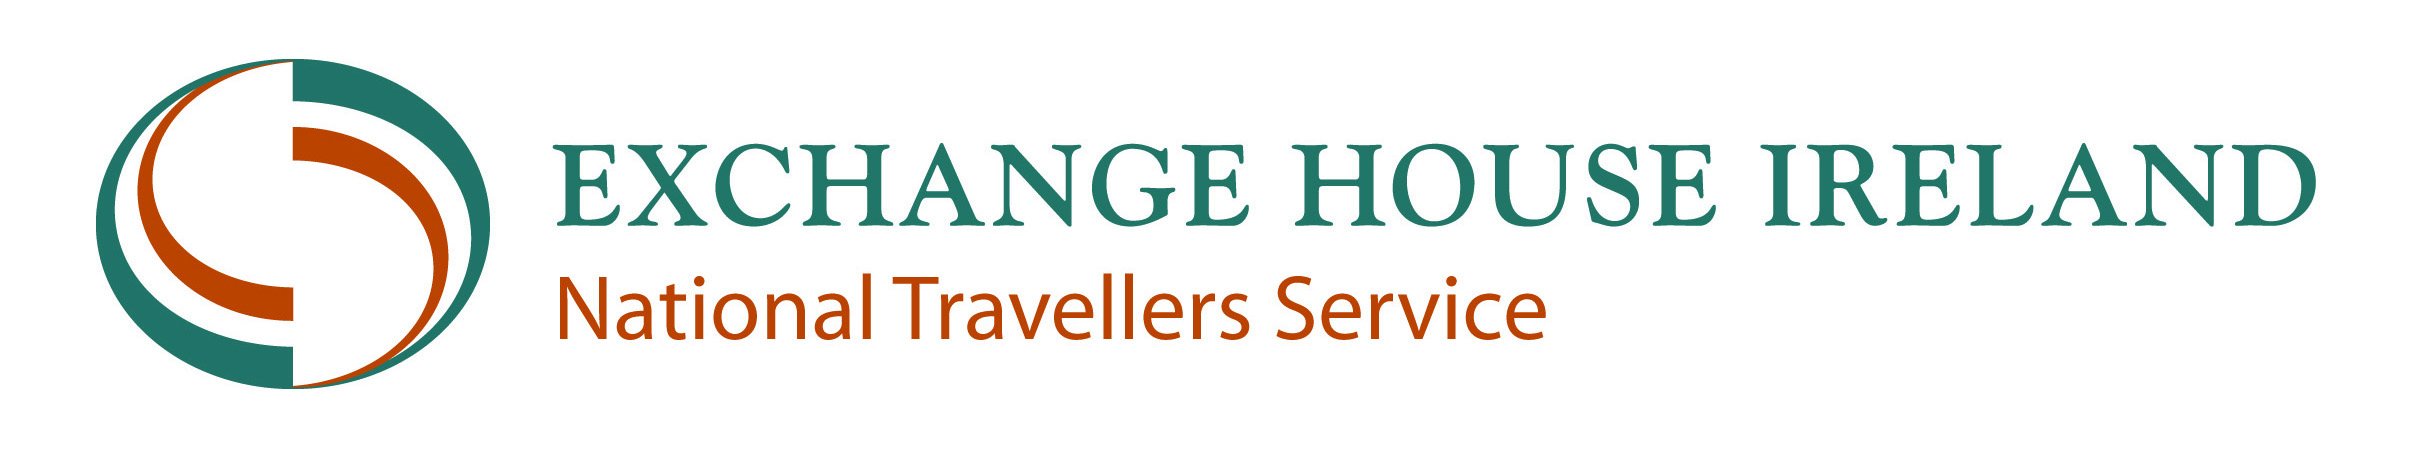 Exchange House Ireland logo